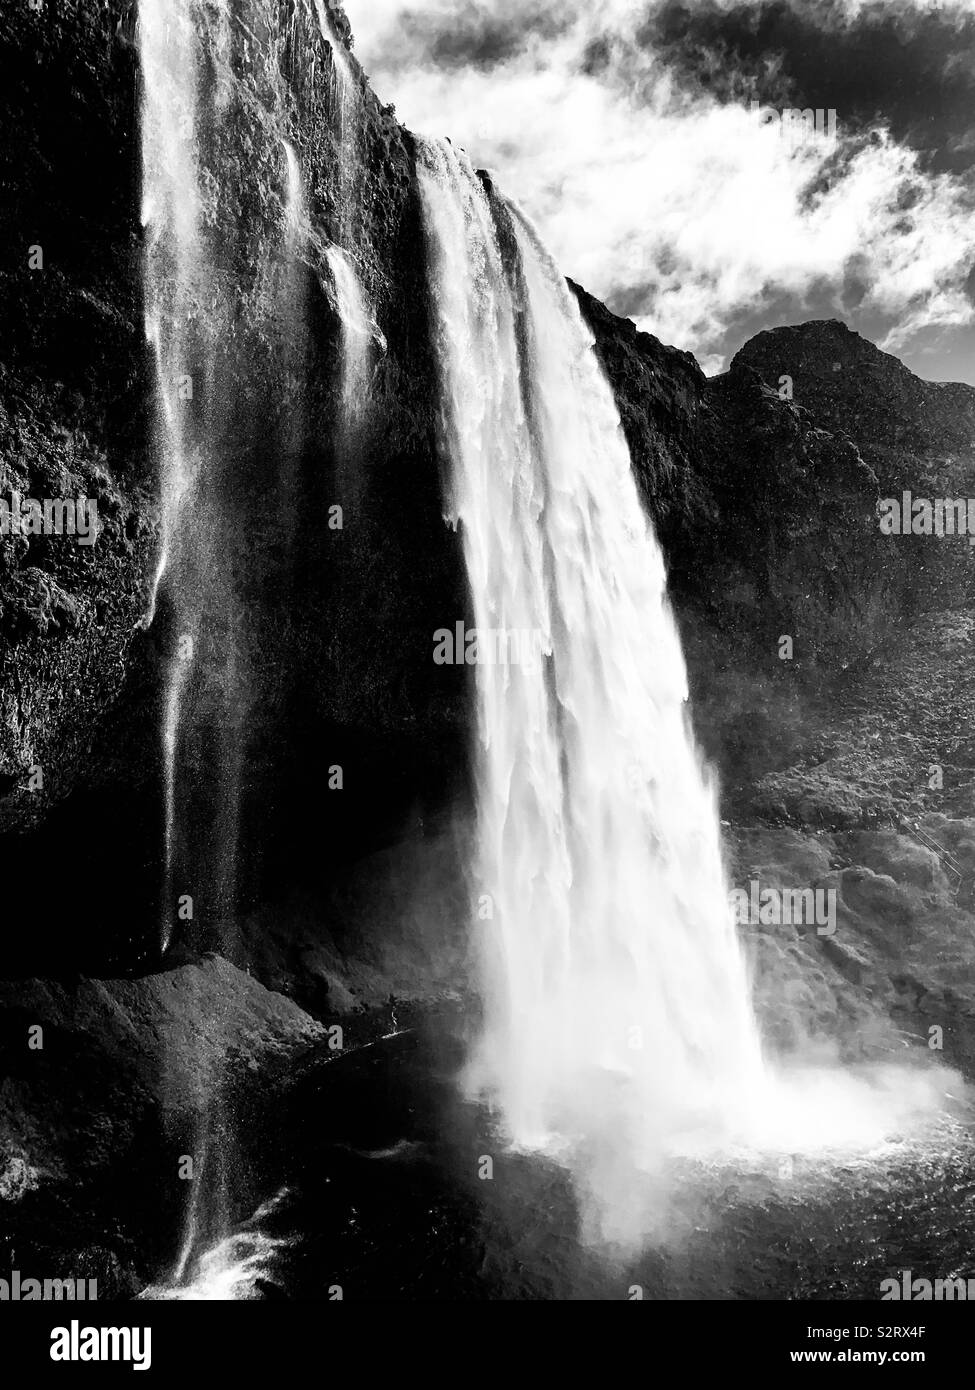 Volcanes en cascada fotografías e imágenes de alta resolución - Alamy